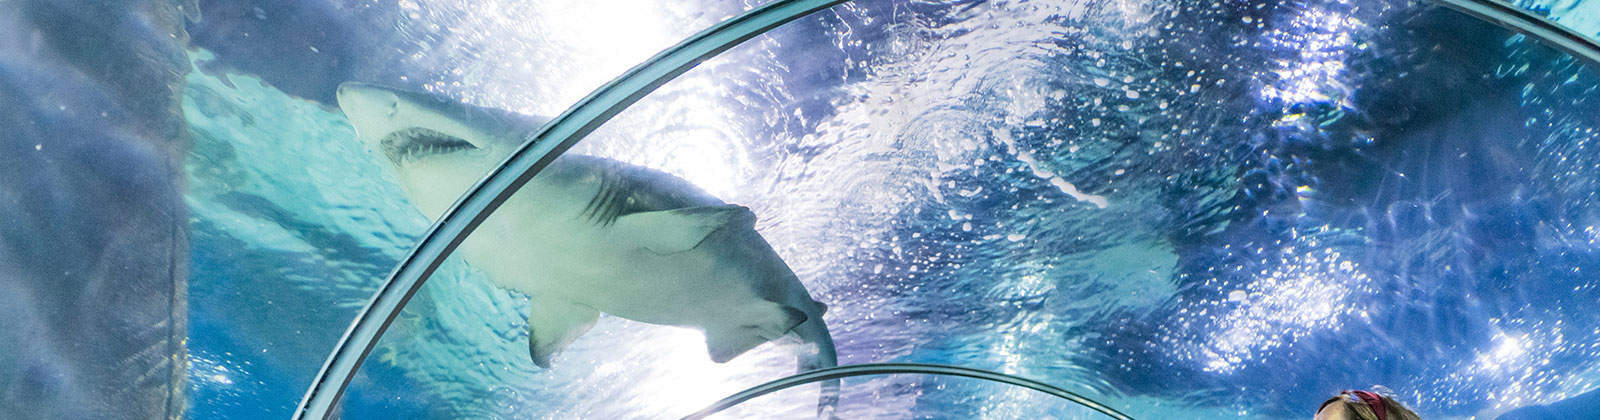 Greater Cleveland Aquarium Shark